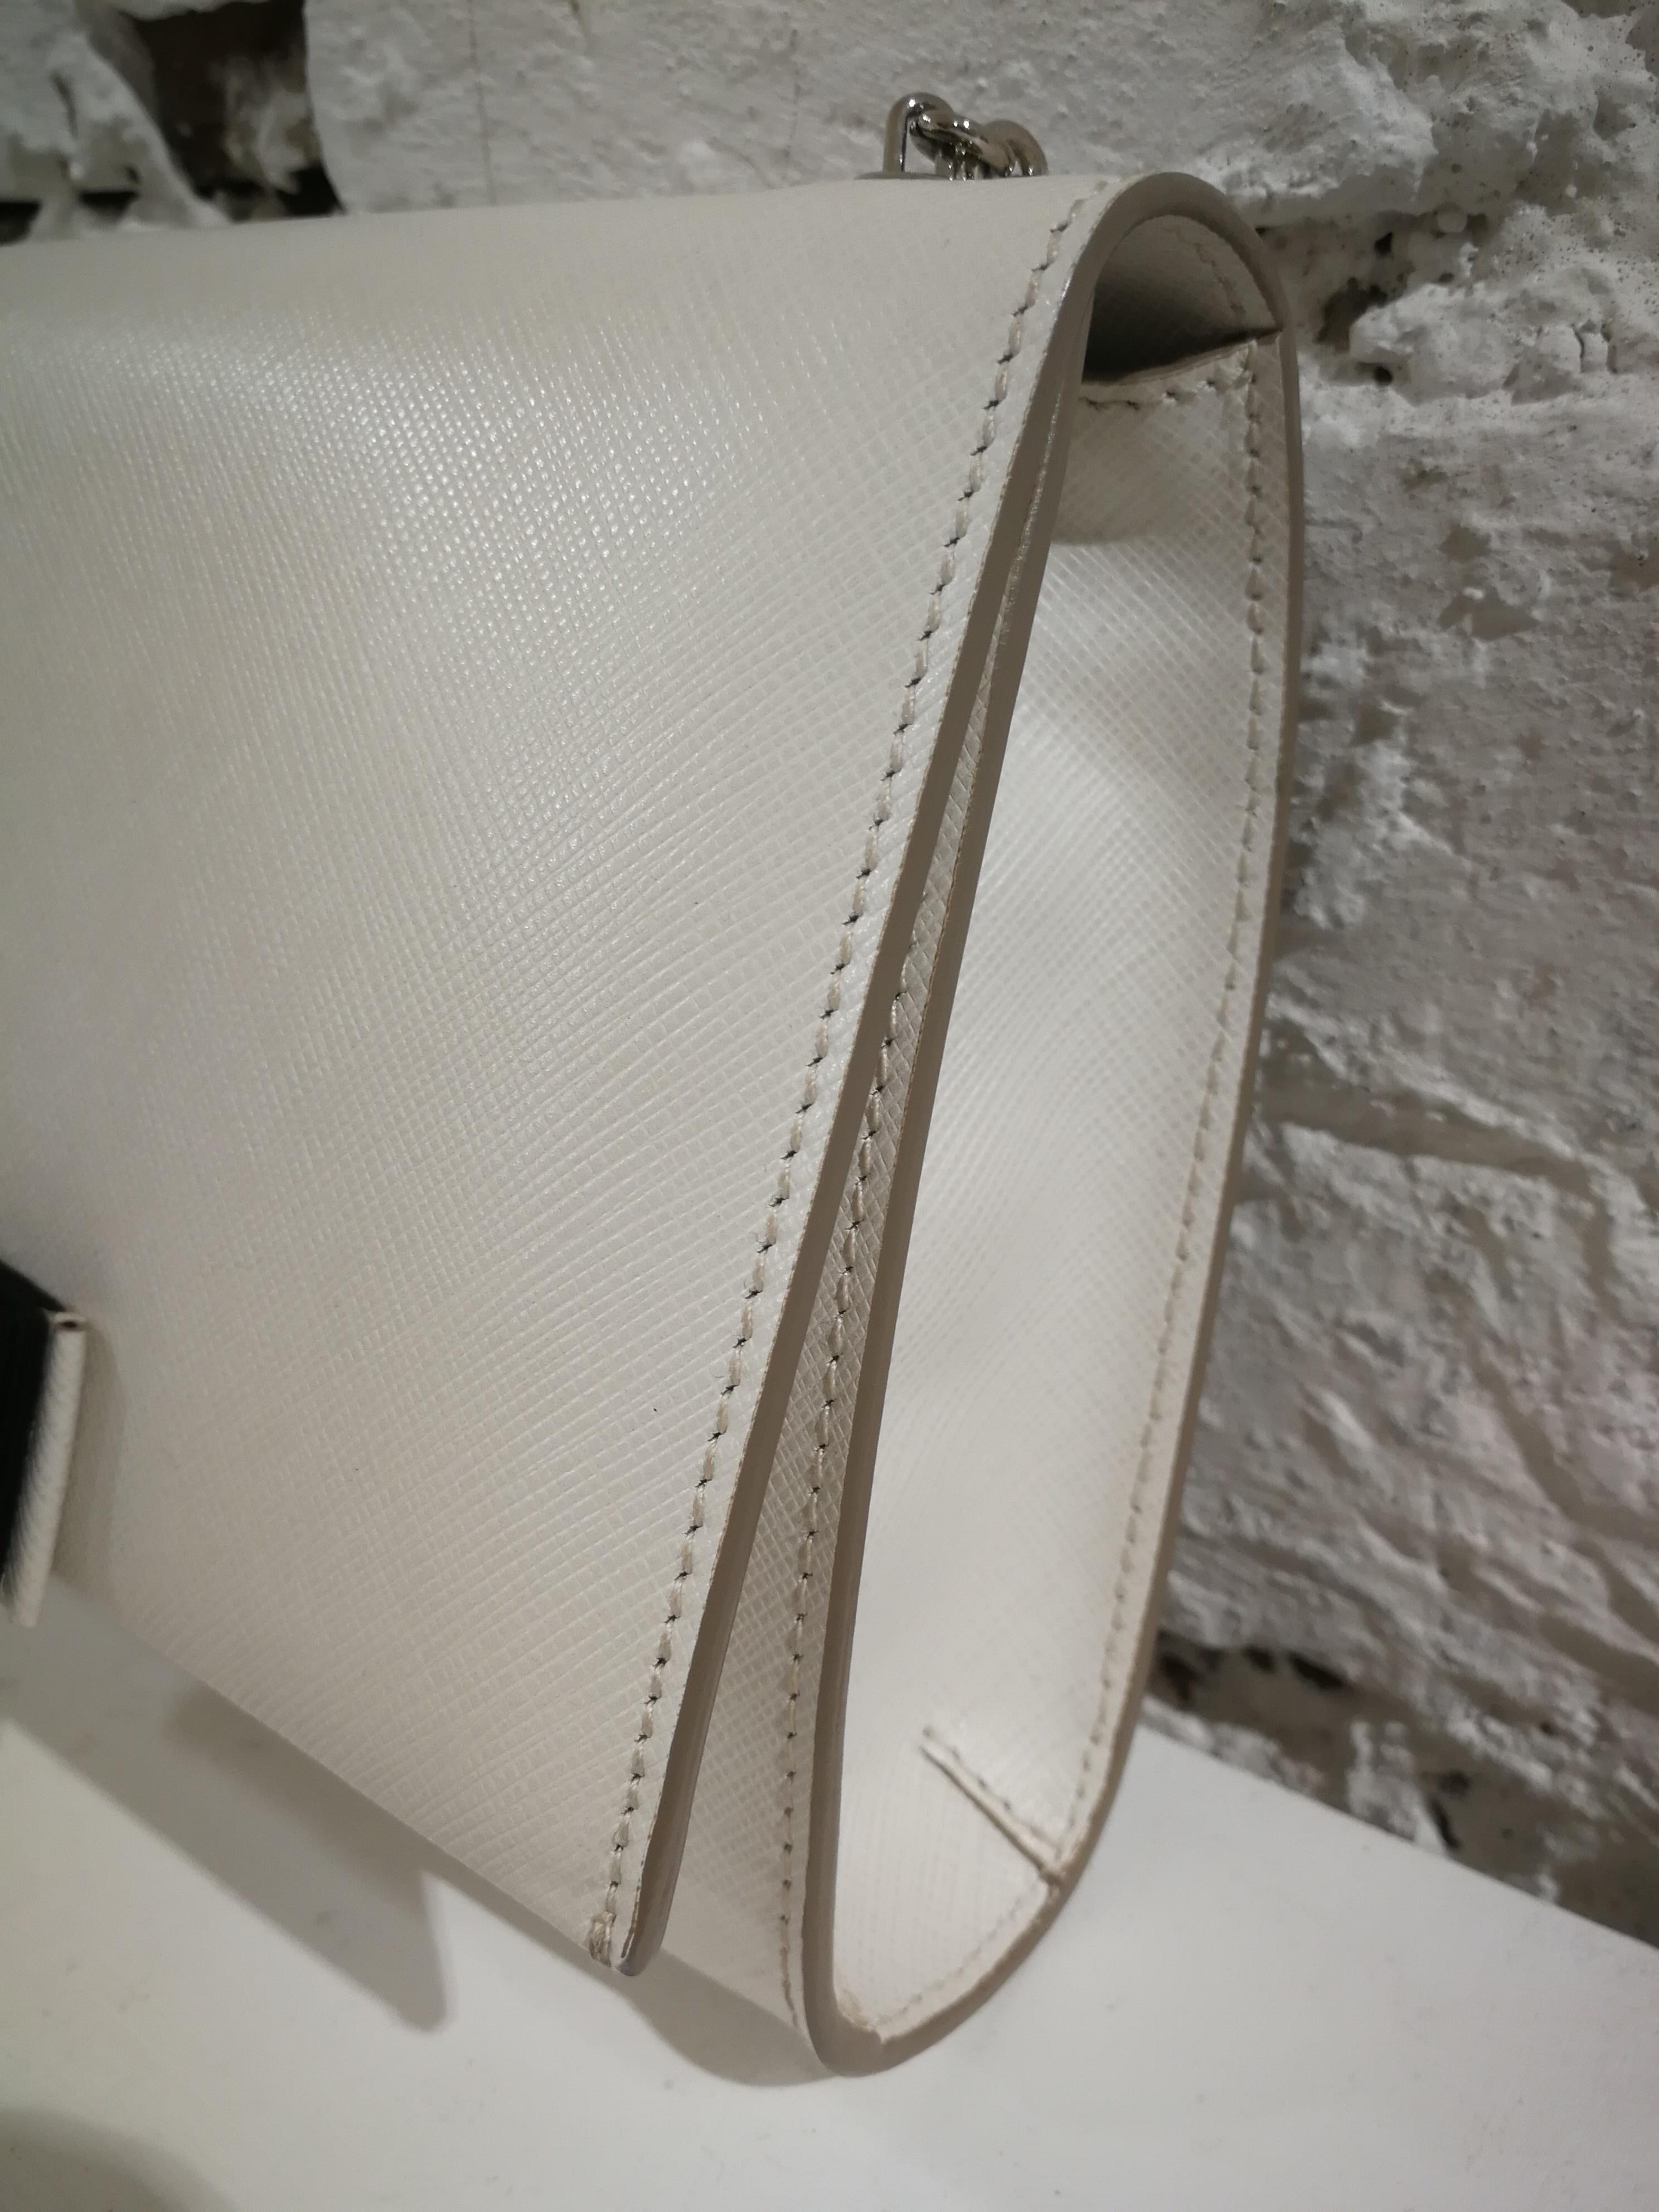 Salvatore Ferragamo White Leather Shoulder Bag

White leather shoulder bag with black bow on the front and silver tone shoulder strap

Measurements:  13 cm h * 19 cm * depth 4 cm 